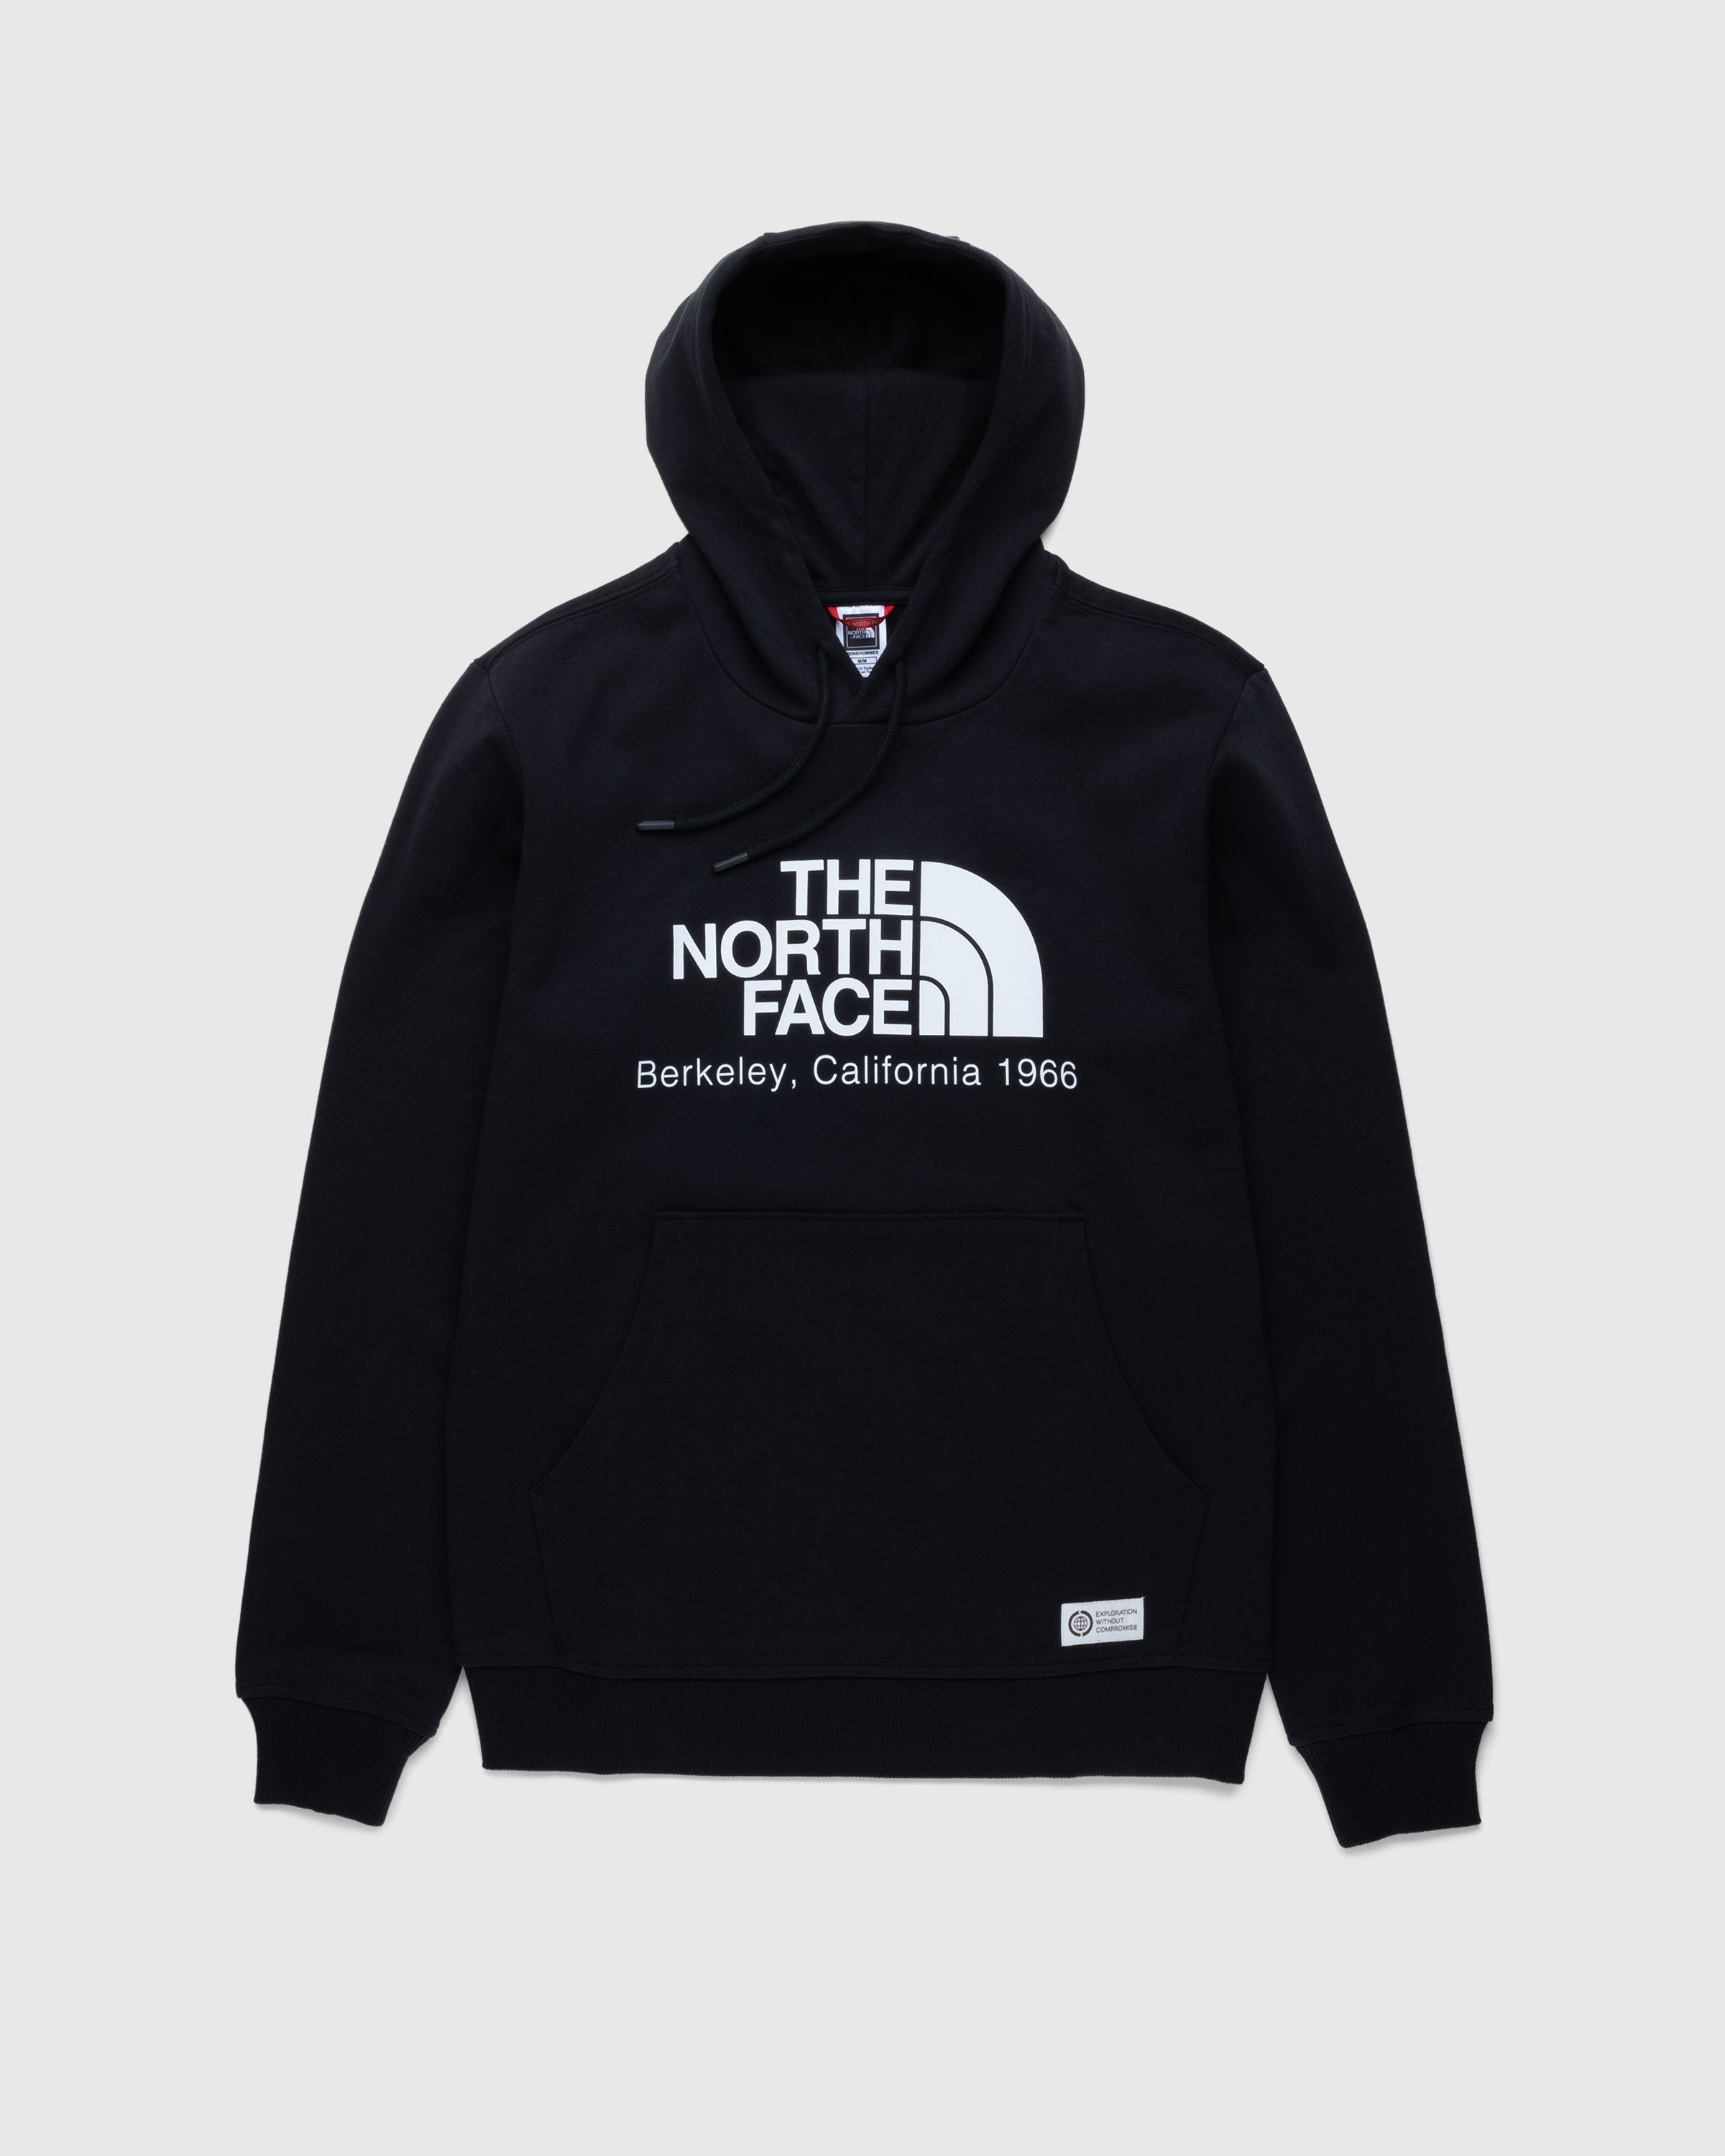 The North Face - Berkeley California Hoodie Black - Clothing - Black - Image 1